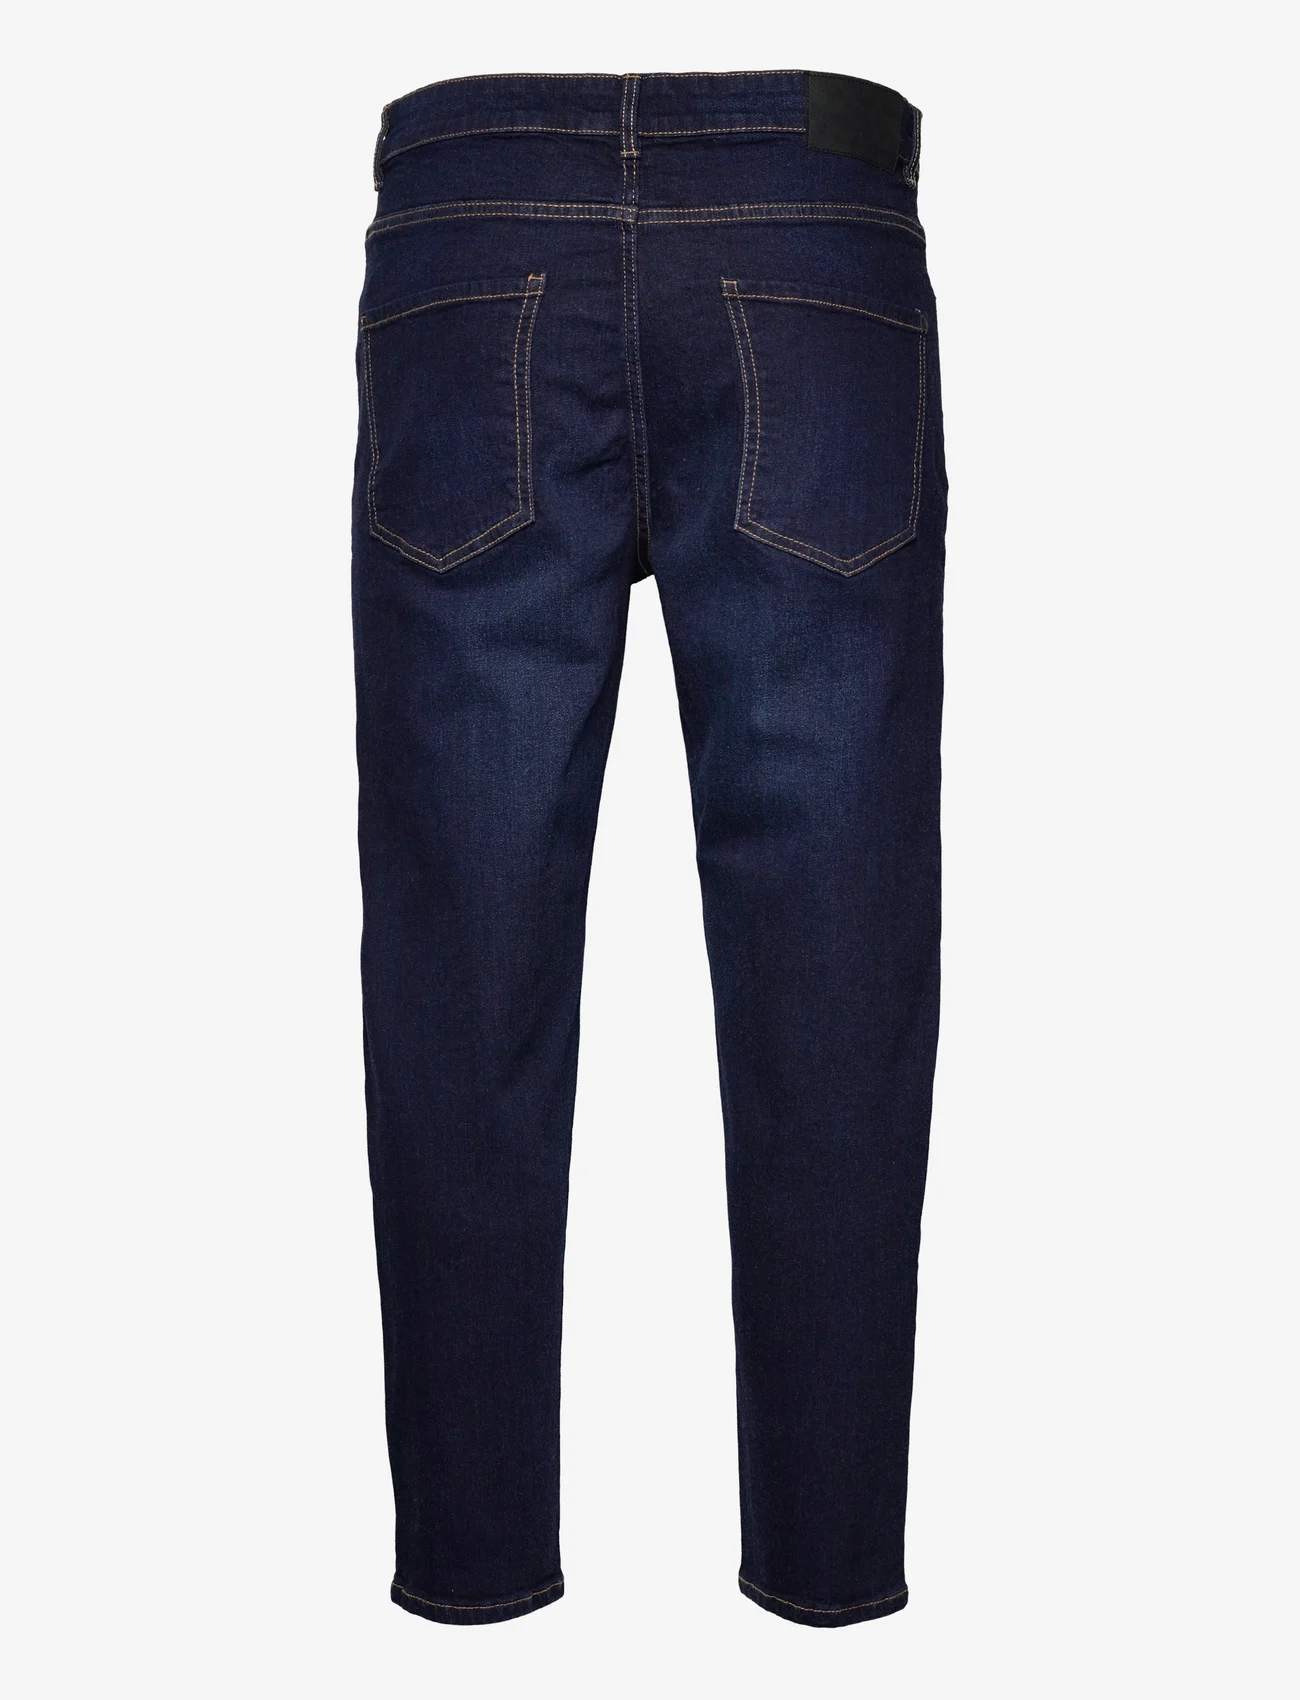 Solid - SDDad - tapered jeans - dark blue denim - 1